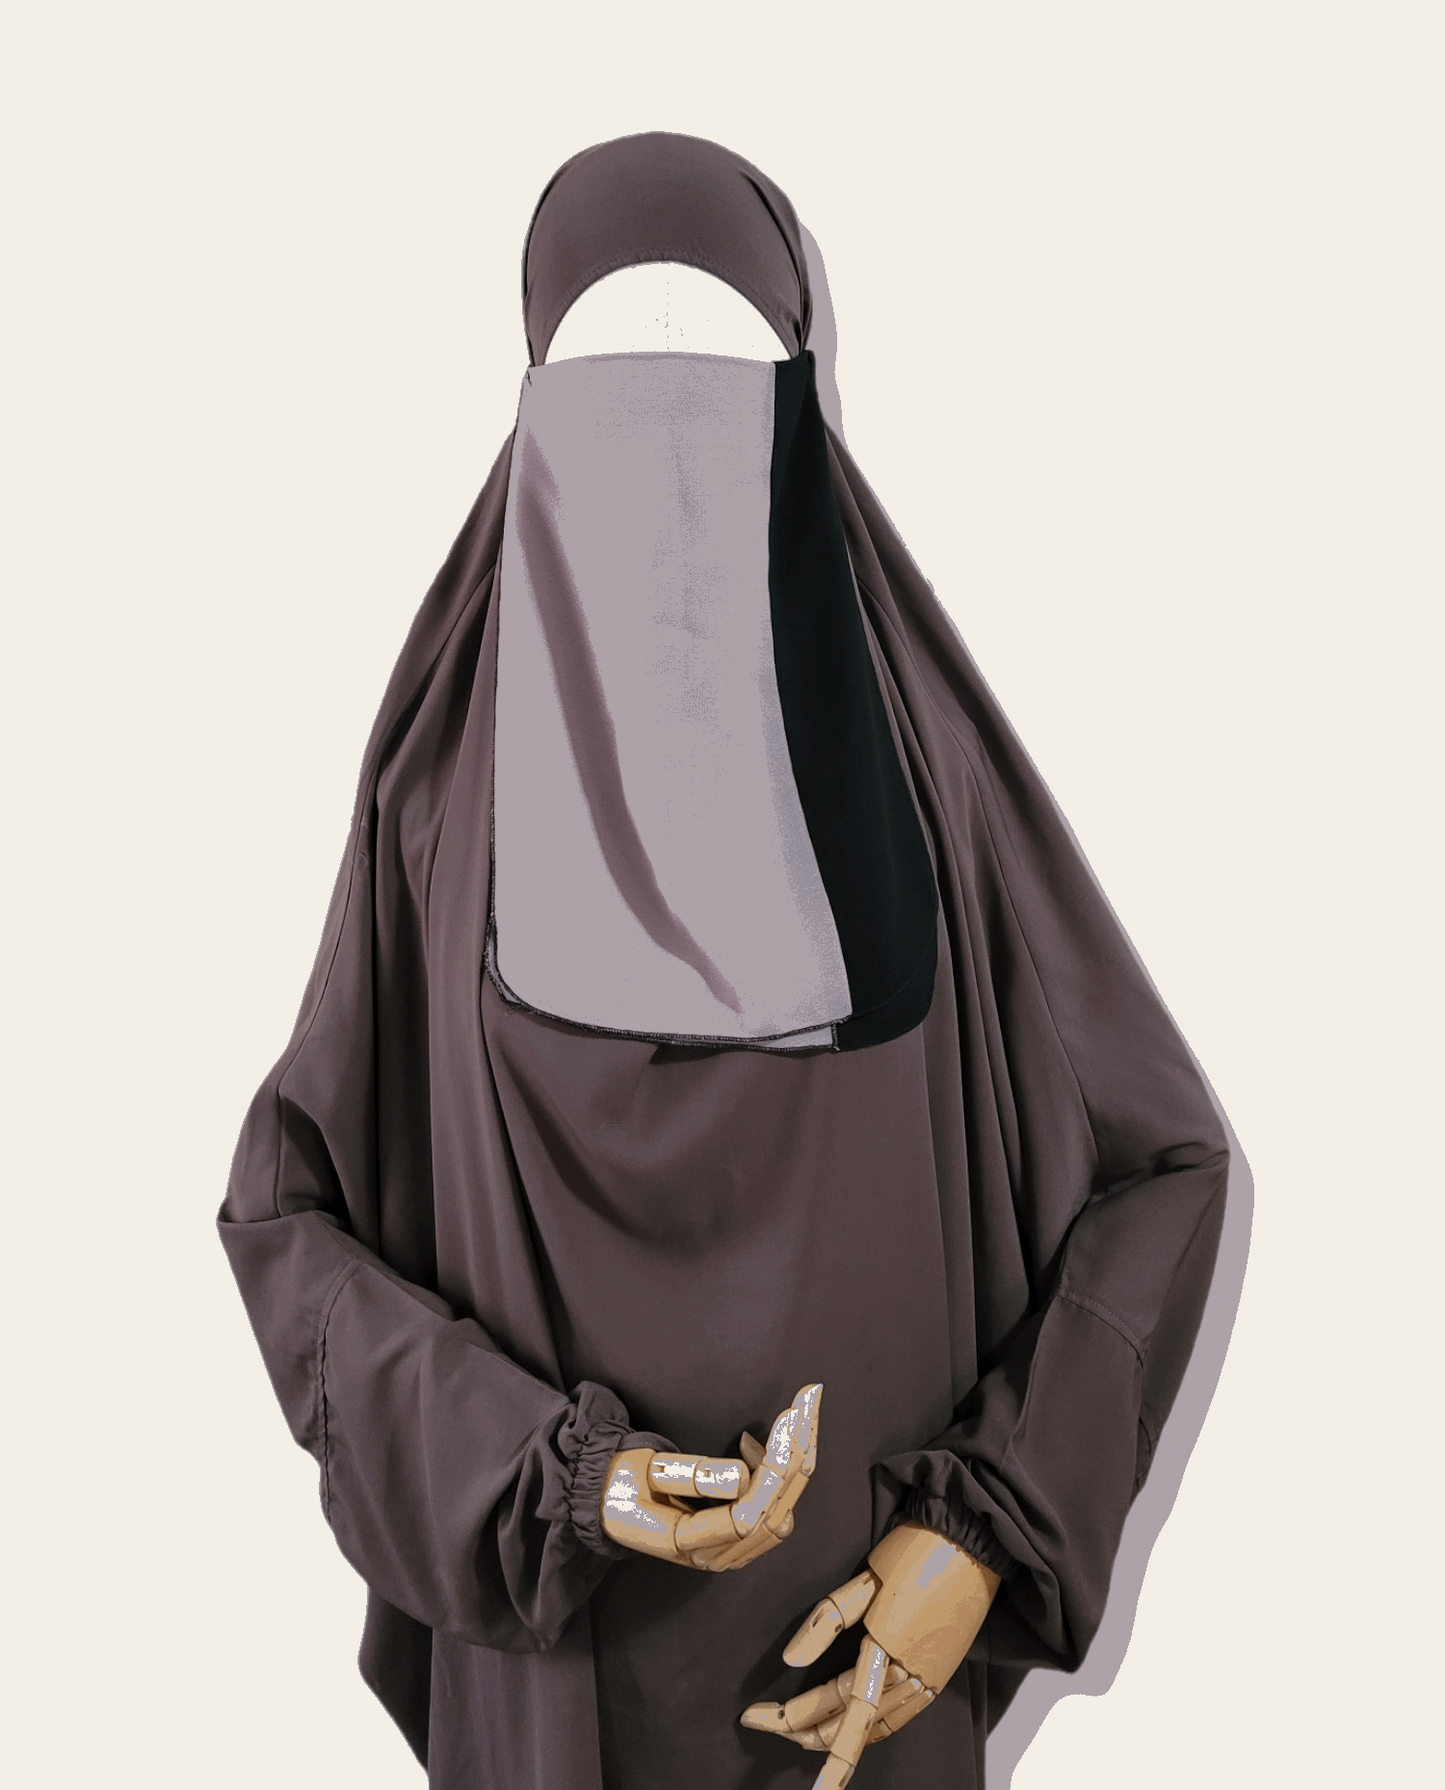 Colorblock half niqab - Rumaysa Fashionz 